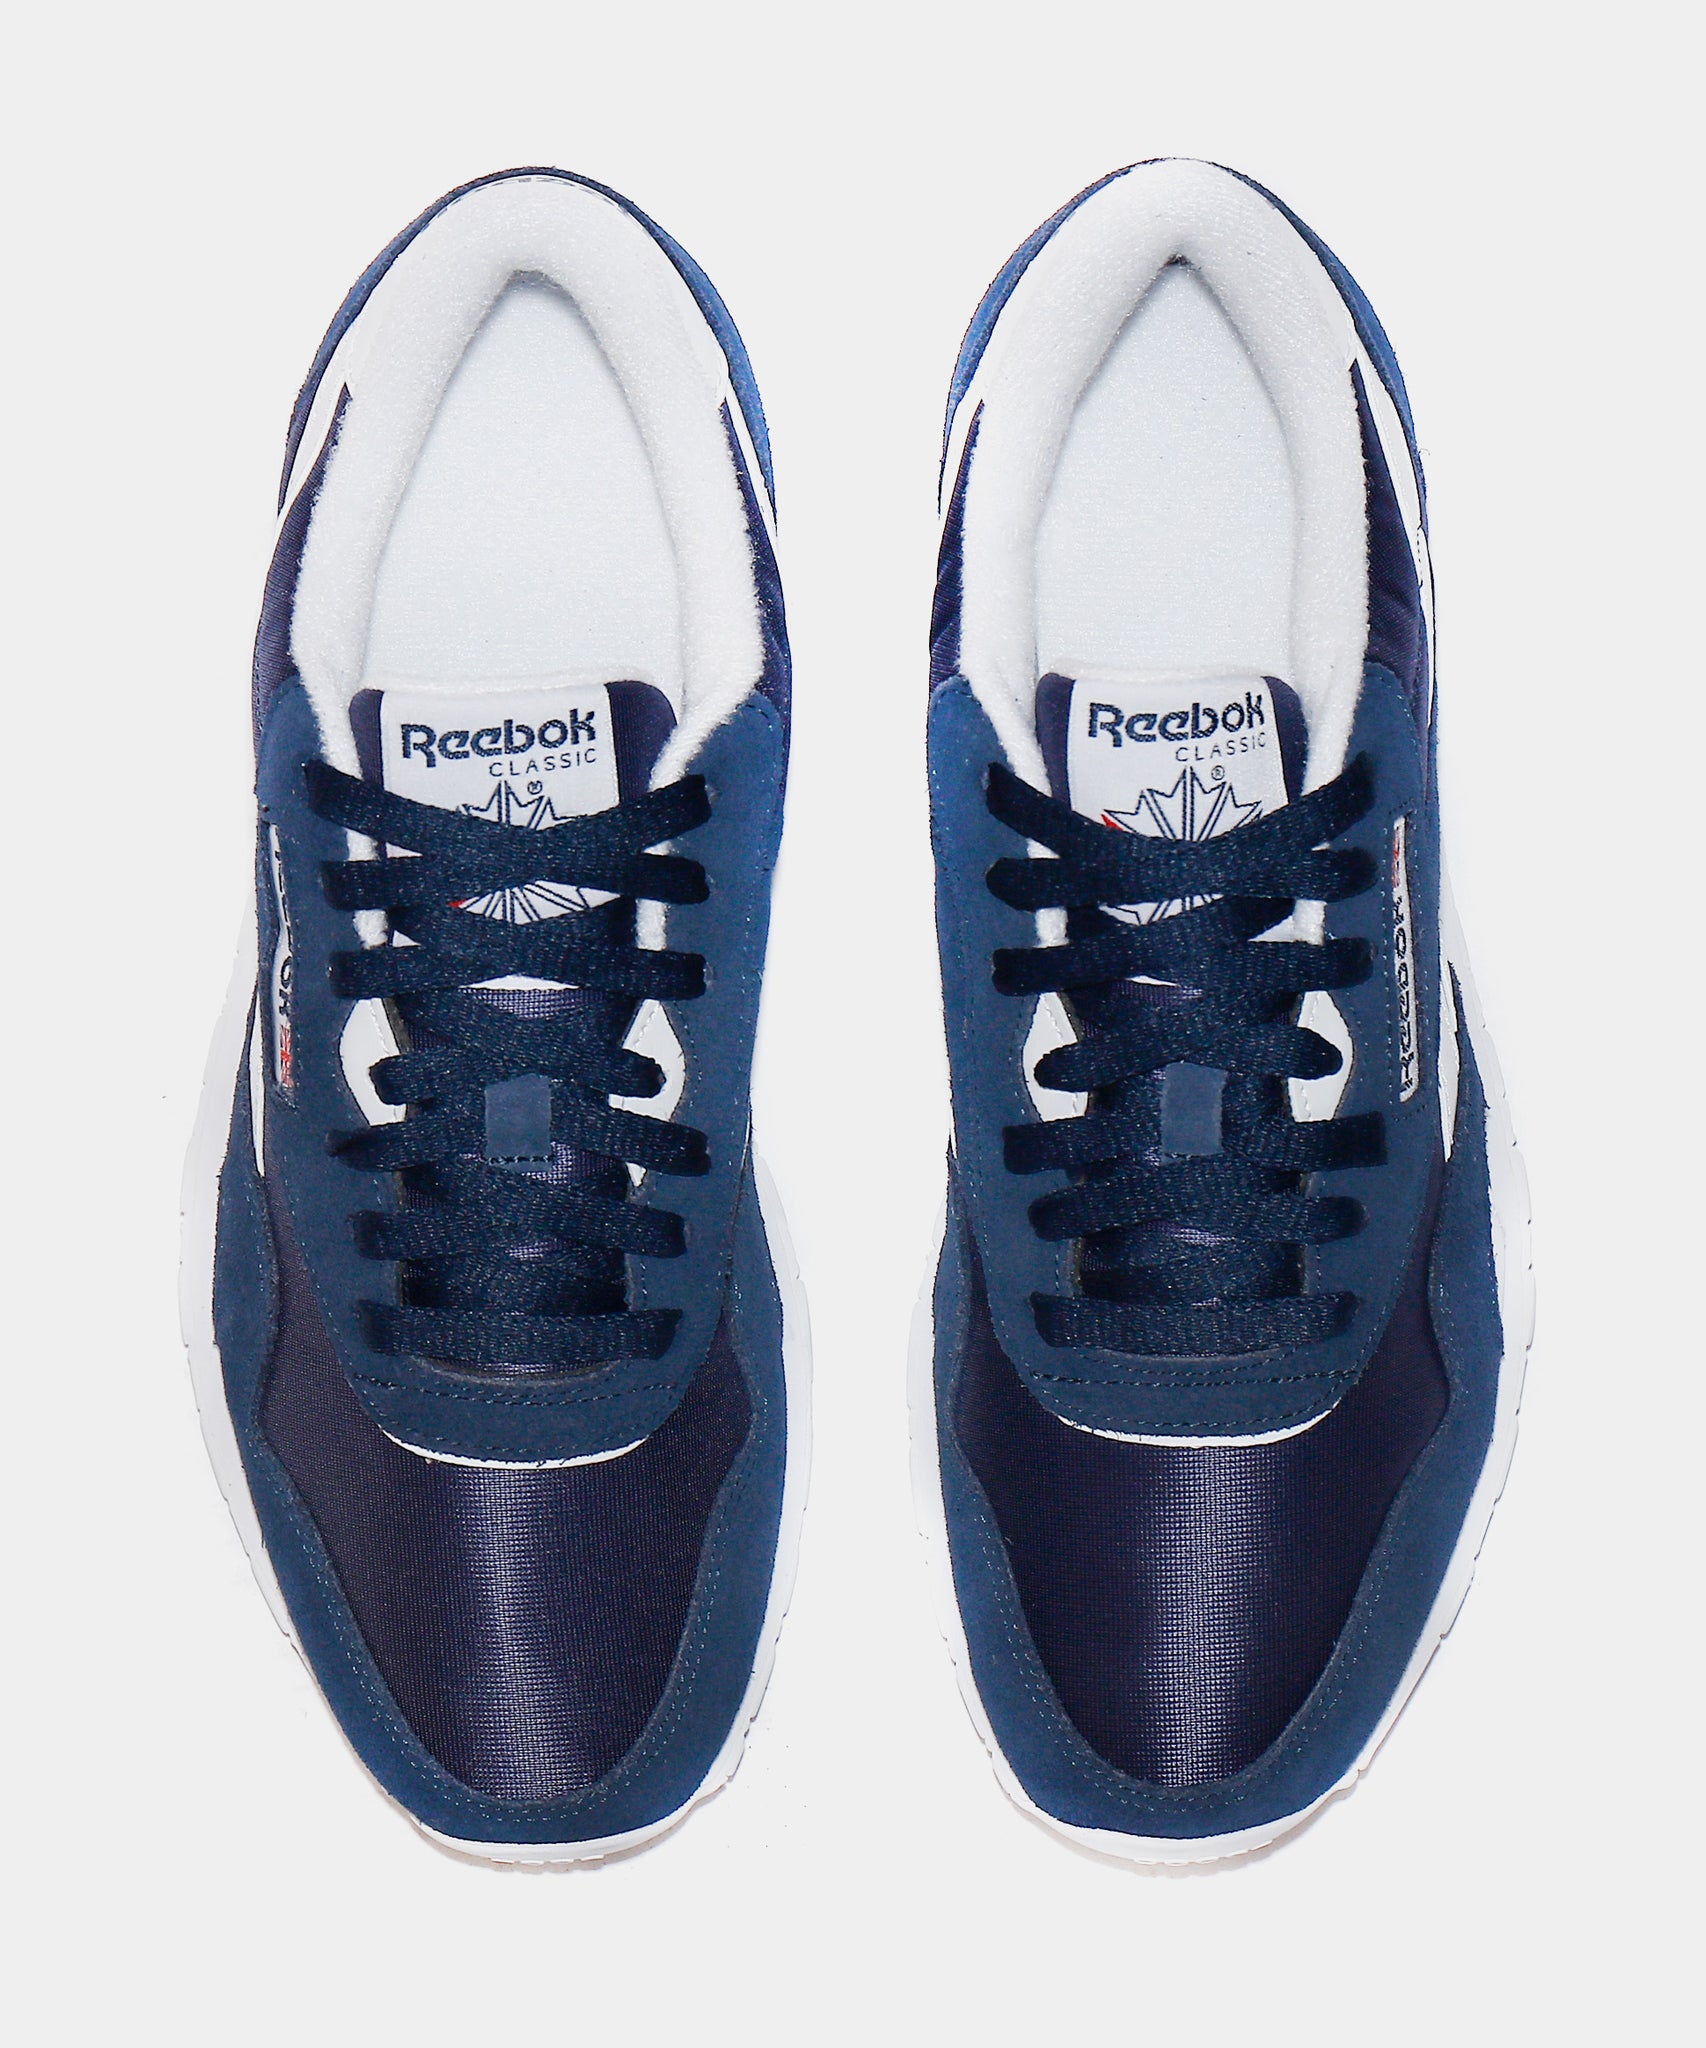 Reebok Classic Nylon Mens Lifestyle Shoes Navy Blue GY7928 – Shoe Palace